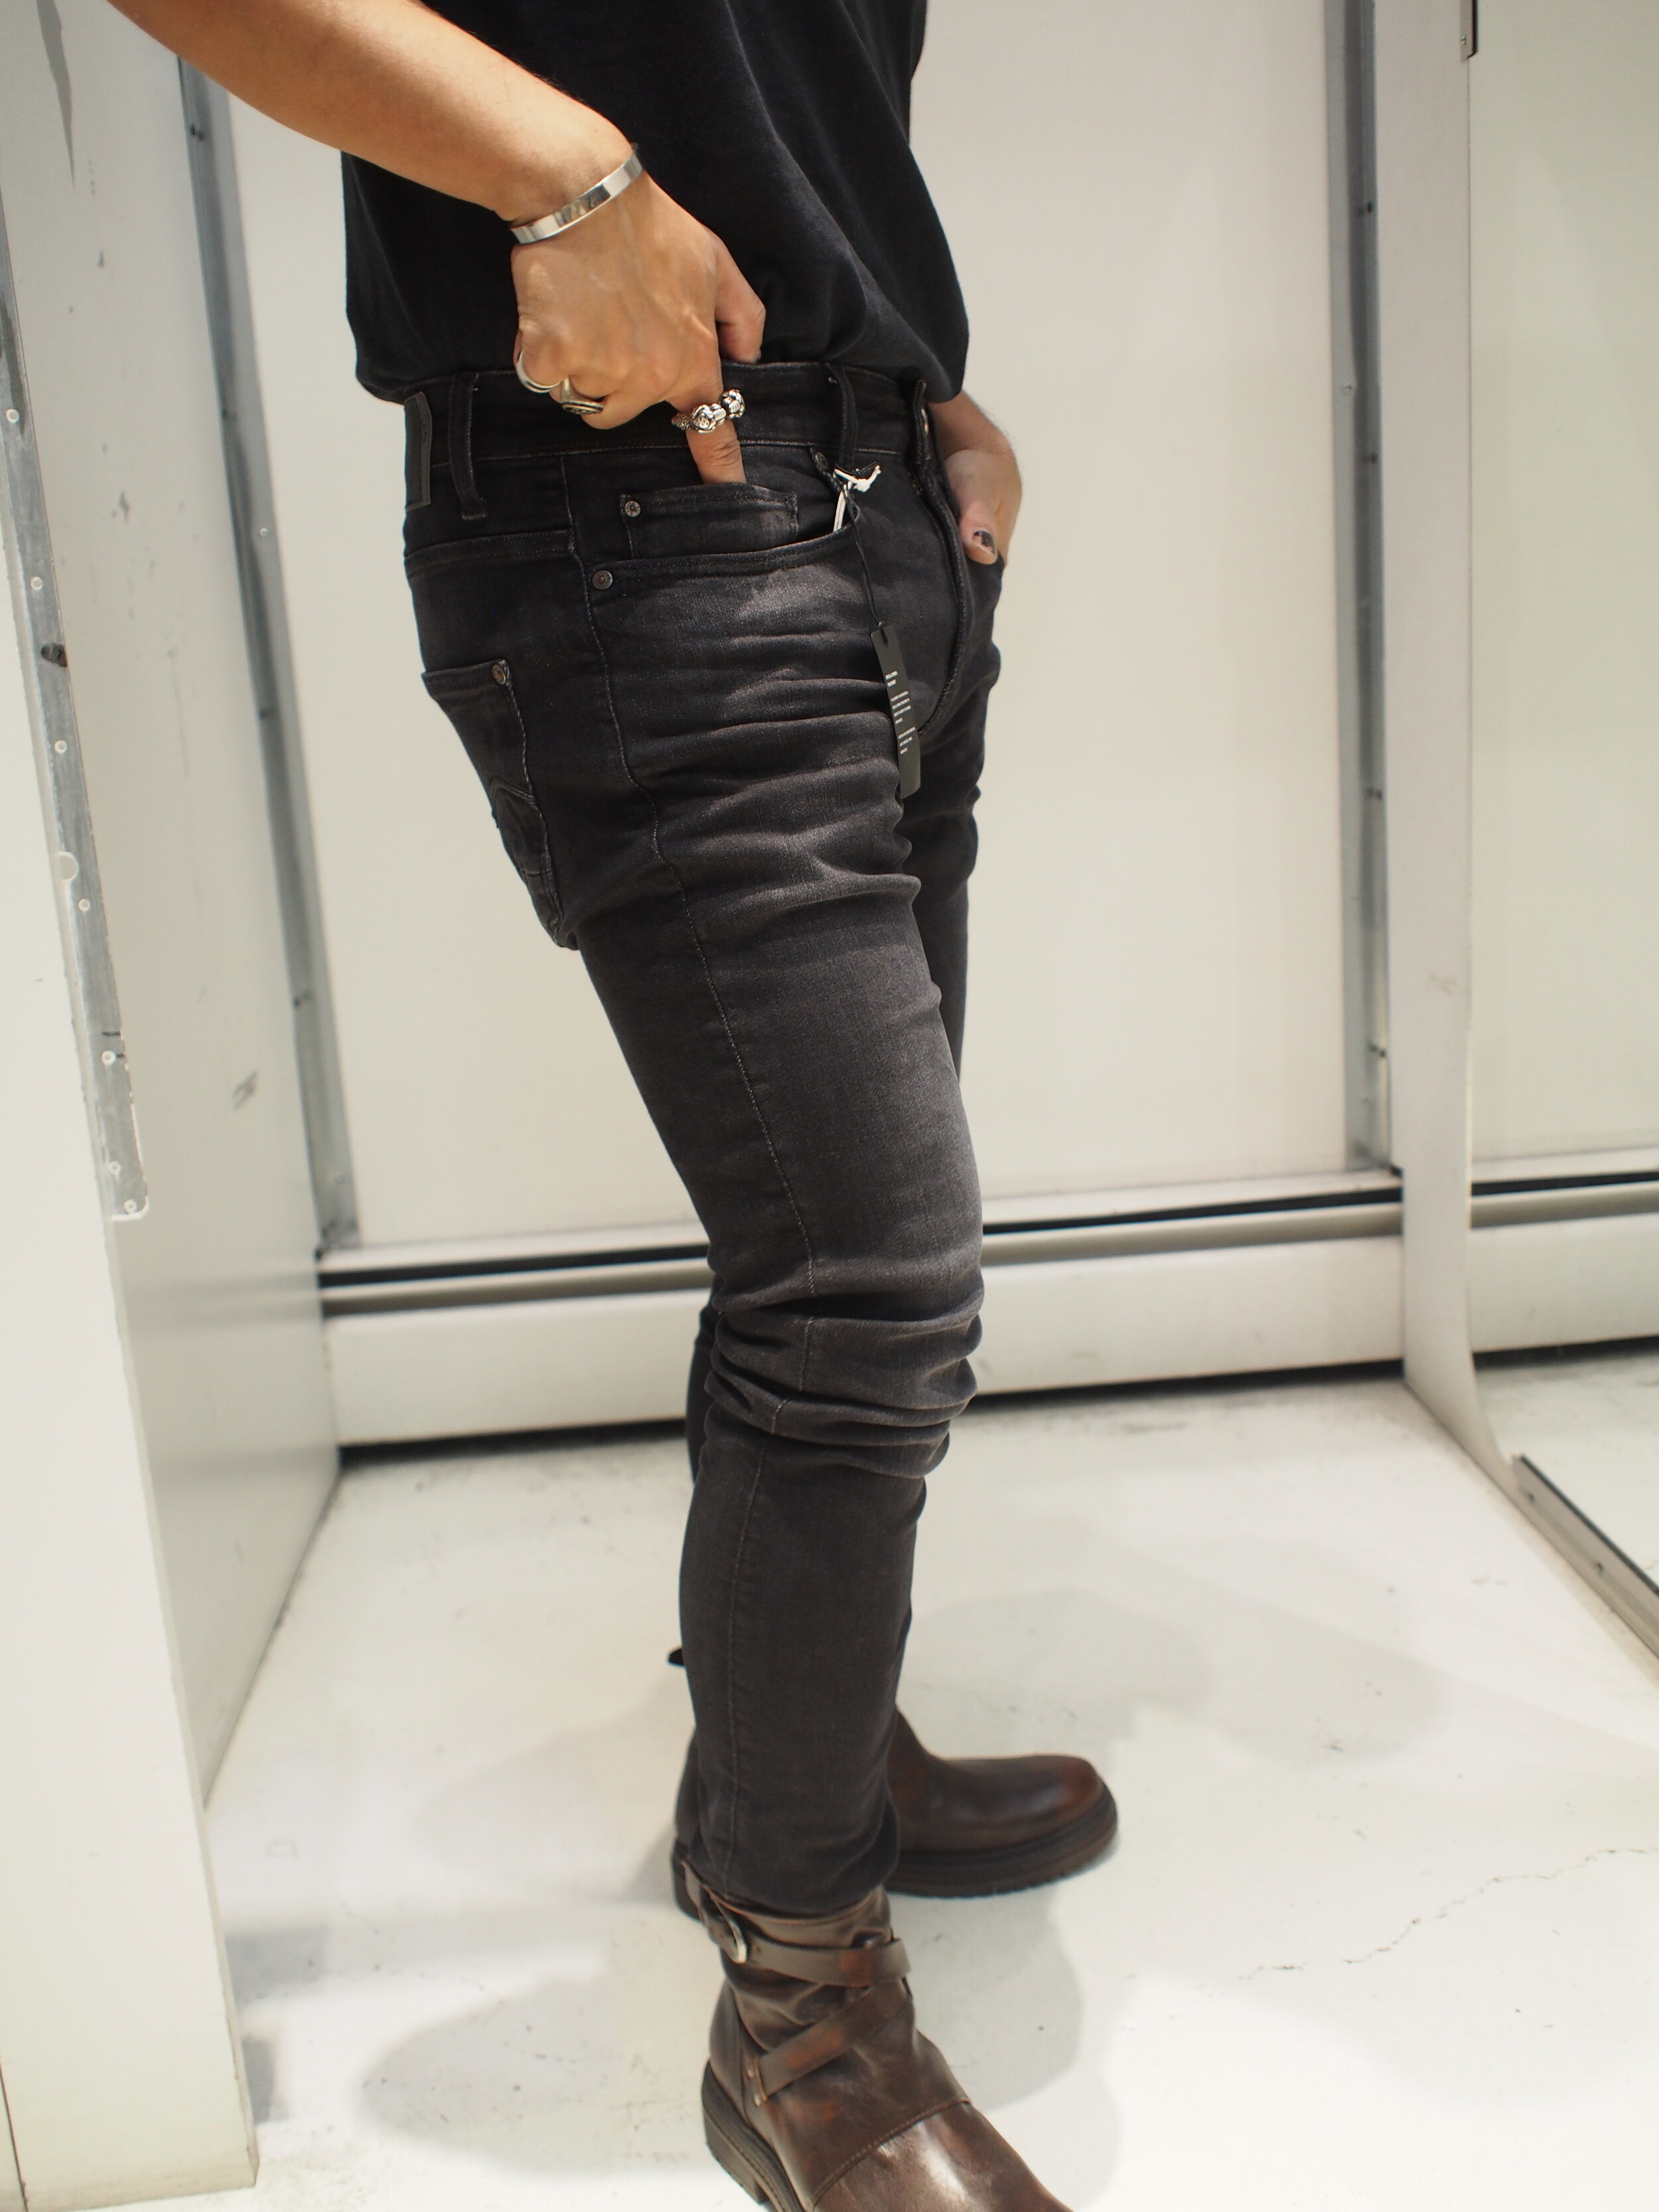 Jeans global Revend Medium atomic Black — - Aged Elto G-Star Raw Skinny Faded inc Superstretch designs